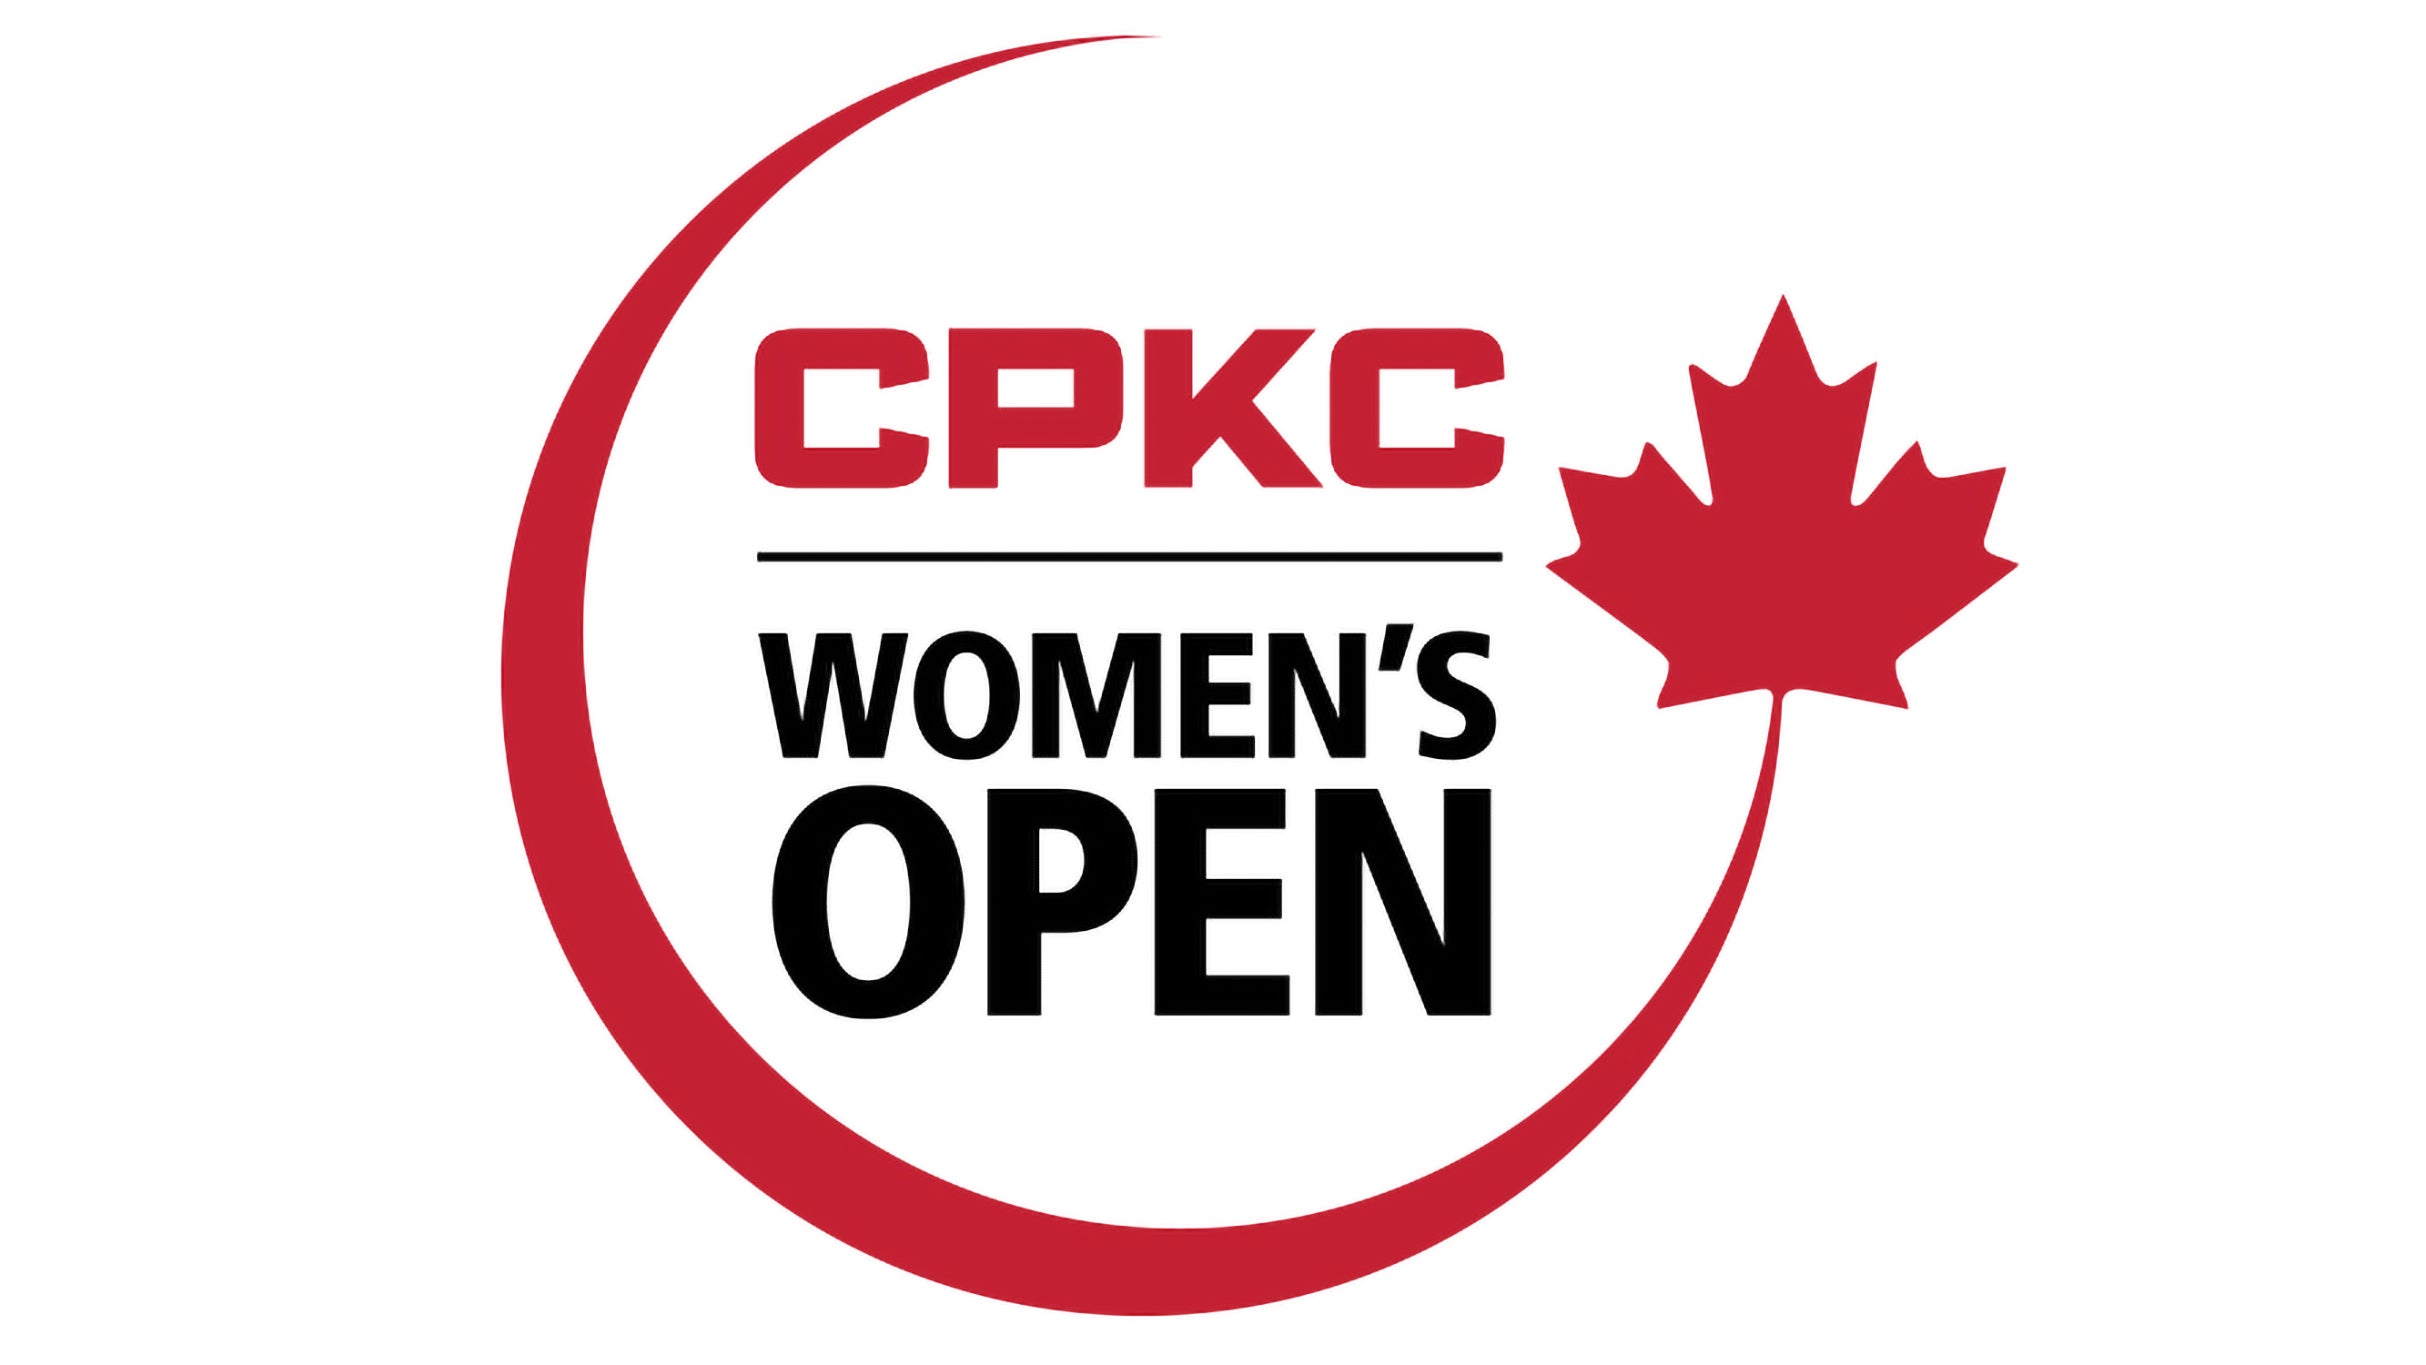 CPKC Women's Open Thursday Ticket